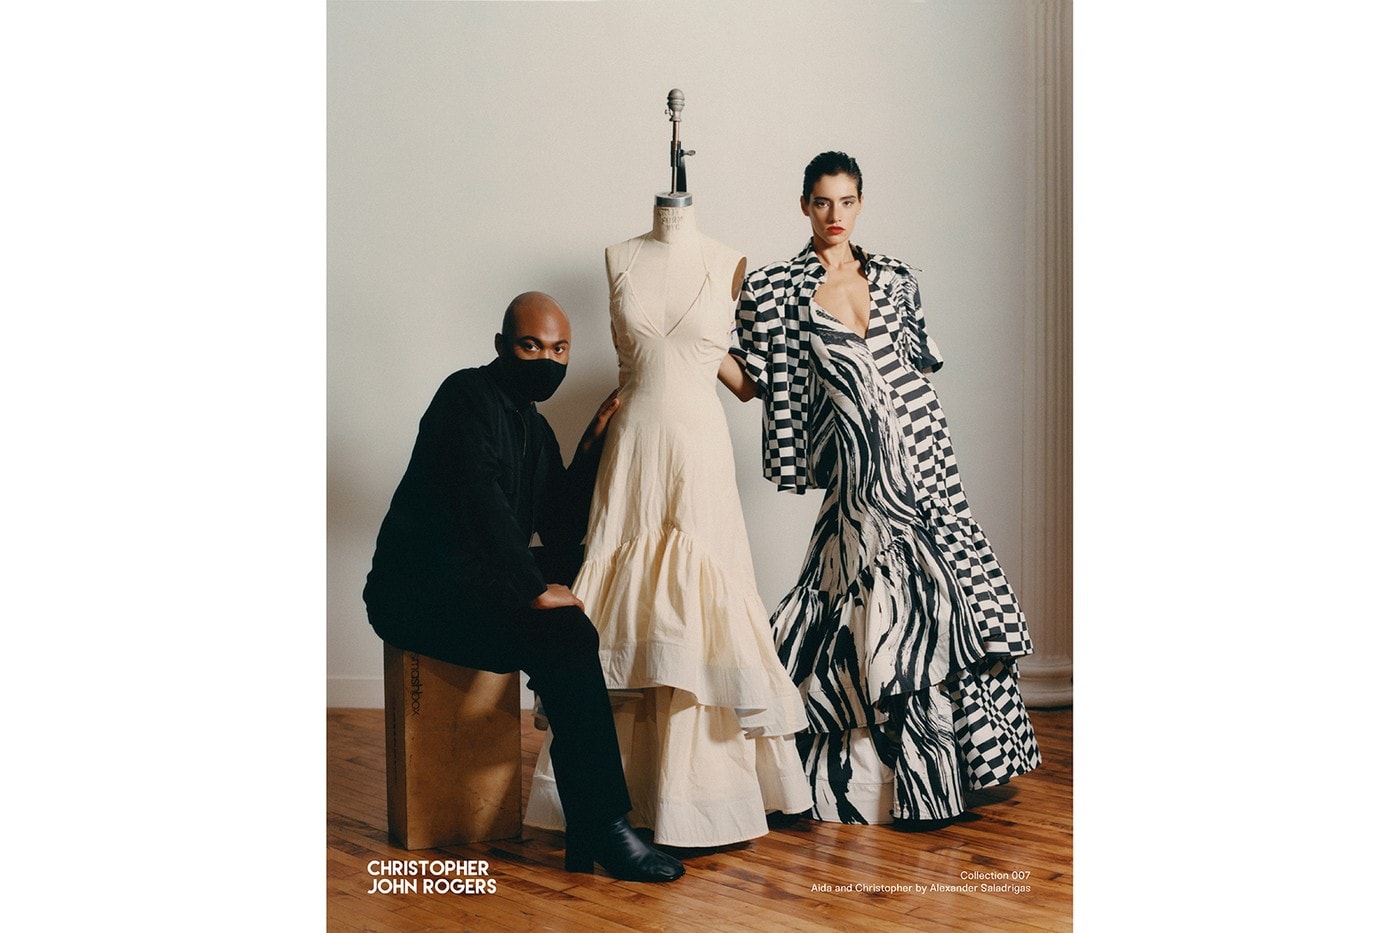 HYPEBAE's Best Fashion Moments of 2020 Telfar Khaite AMBUSH Pyer Moss Prad Gucci Kerby Jean raymond Christopher John Rogers